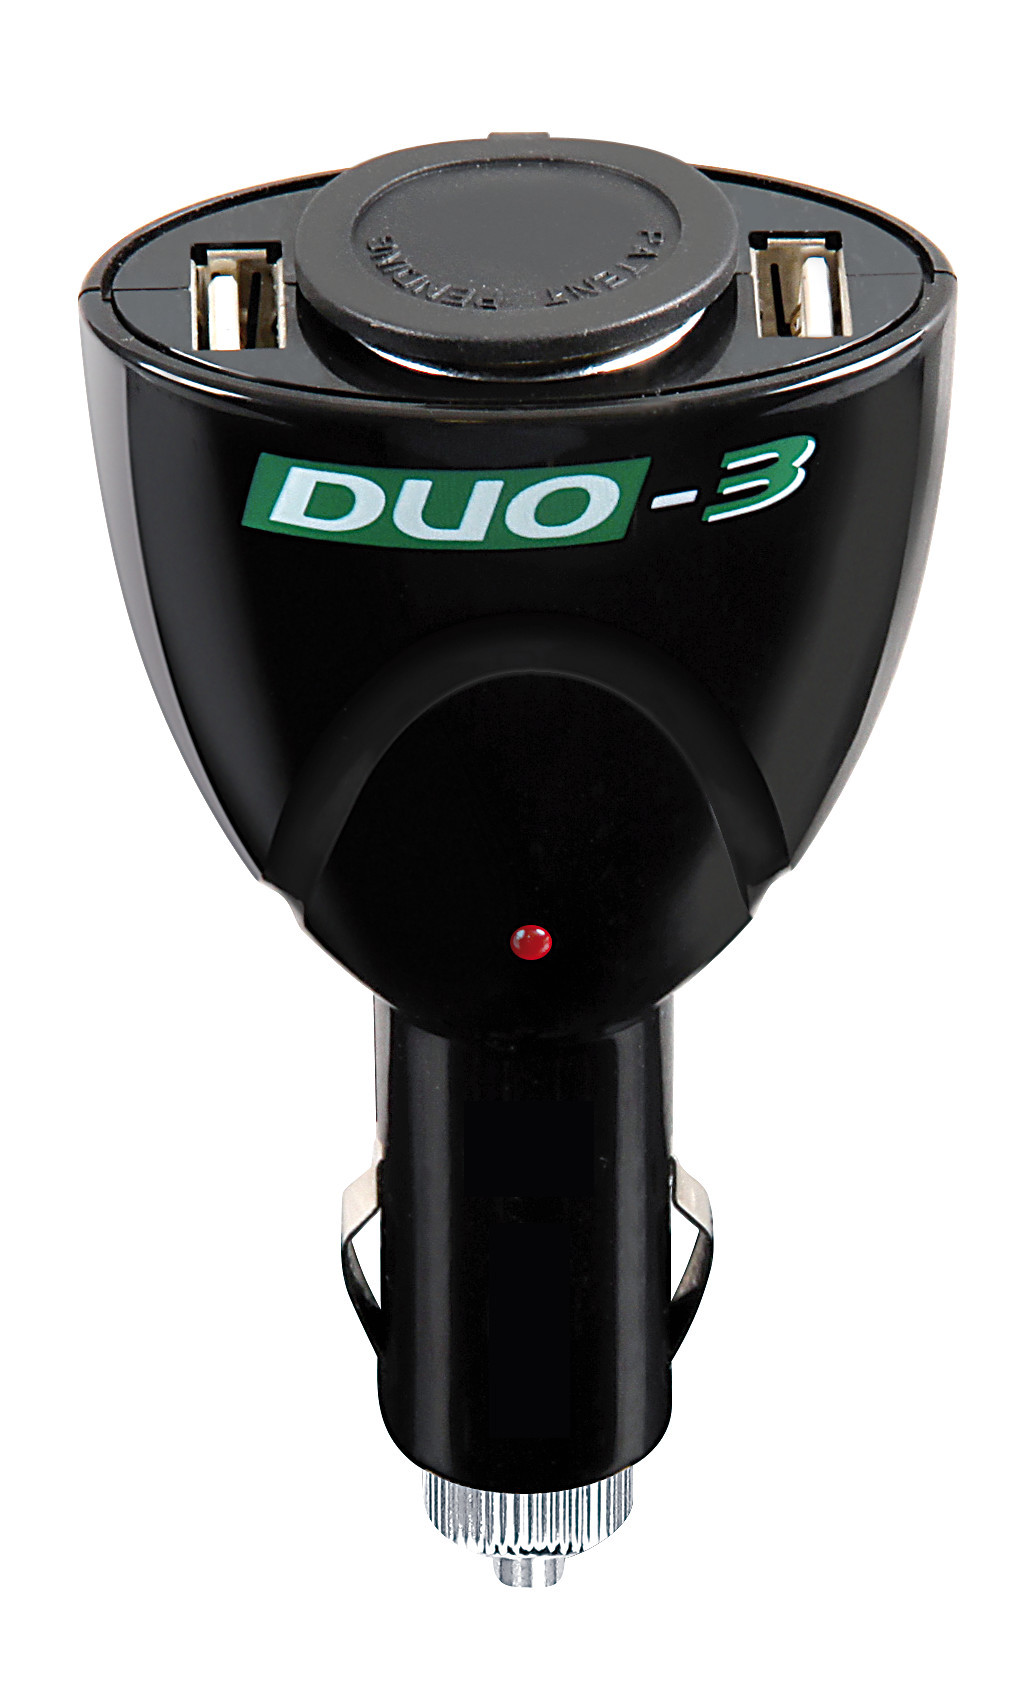 Duo-3, lighter plug dual power 12V + USB thumb